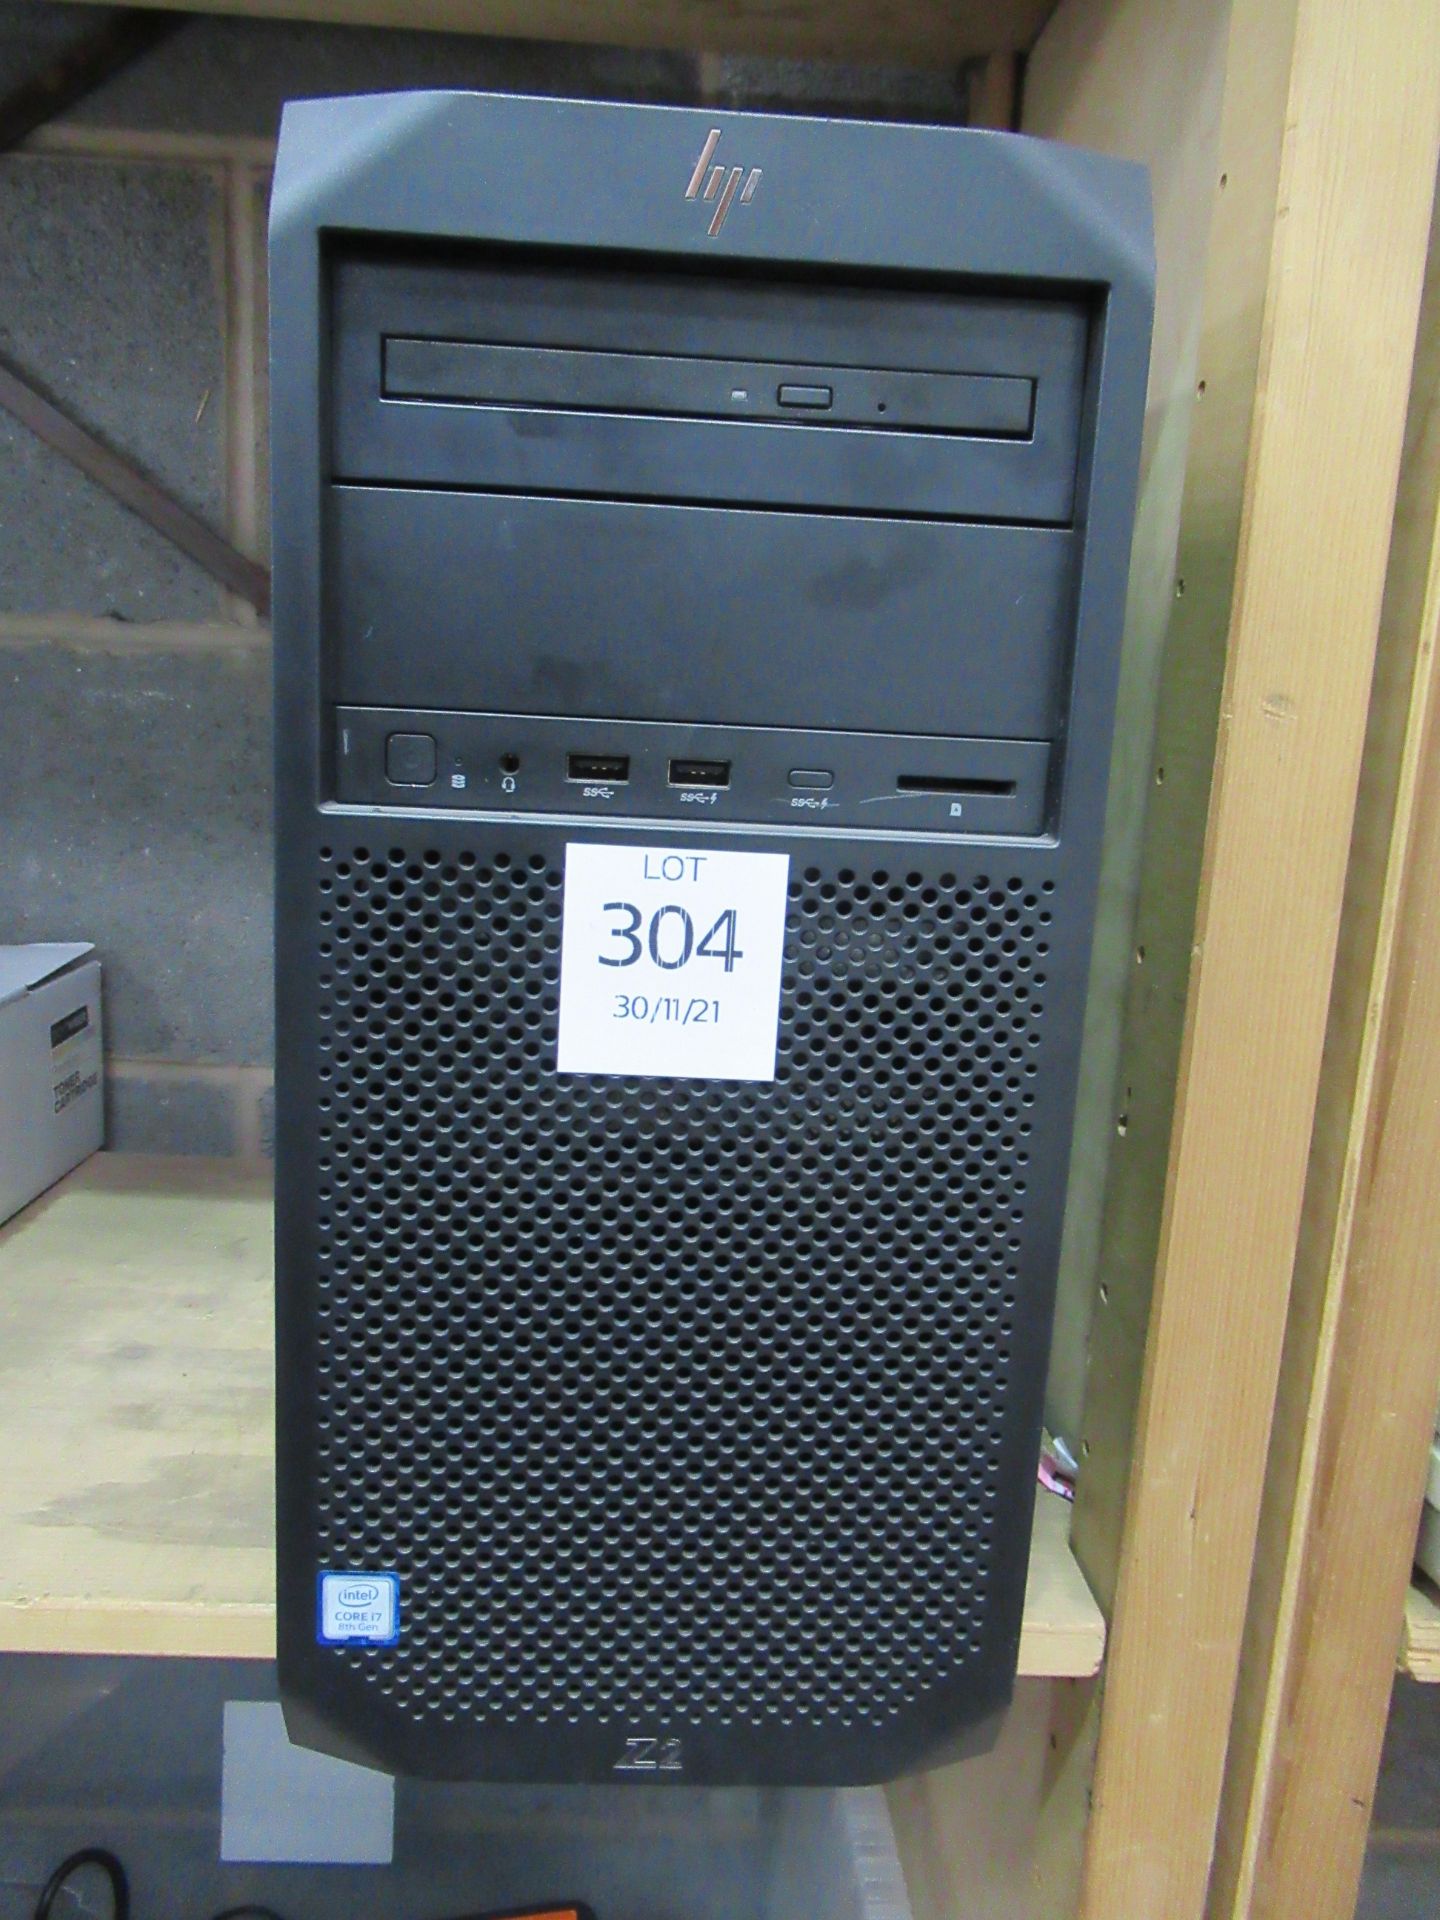 A HP Z2 Intel i7 8th generation PC tower